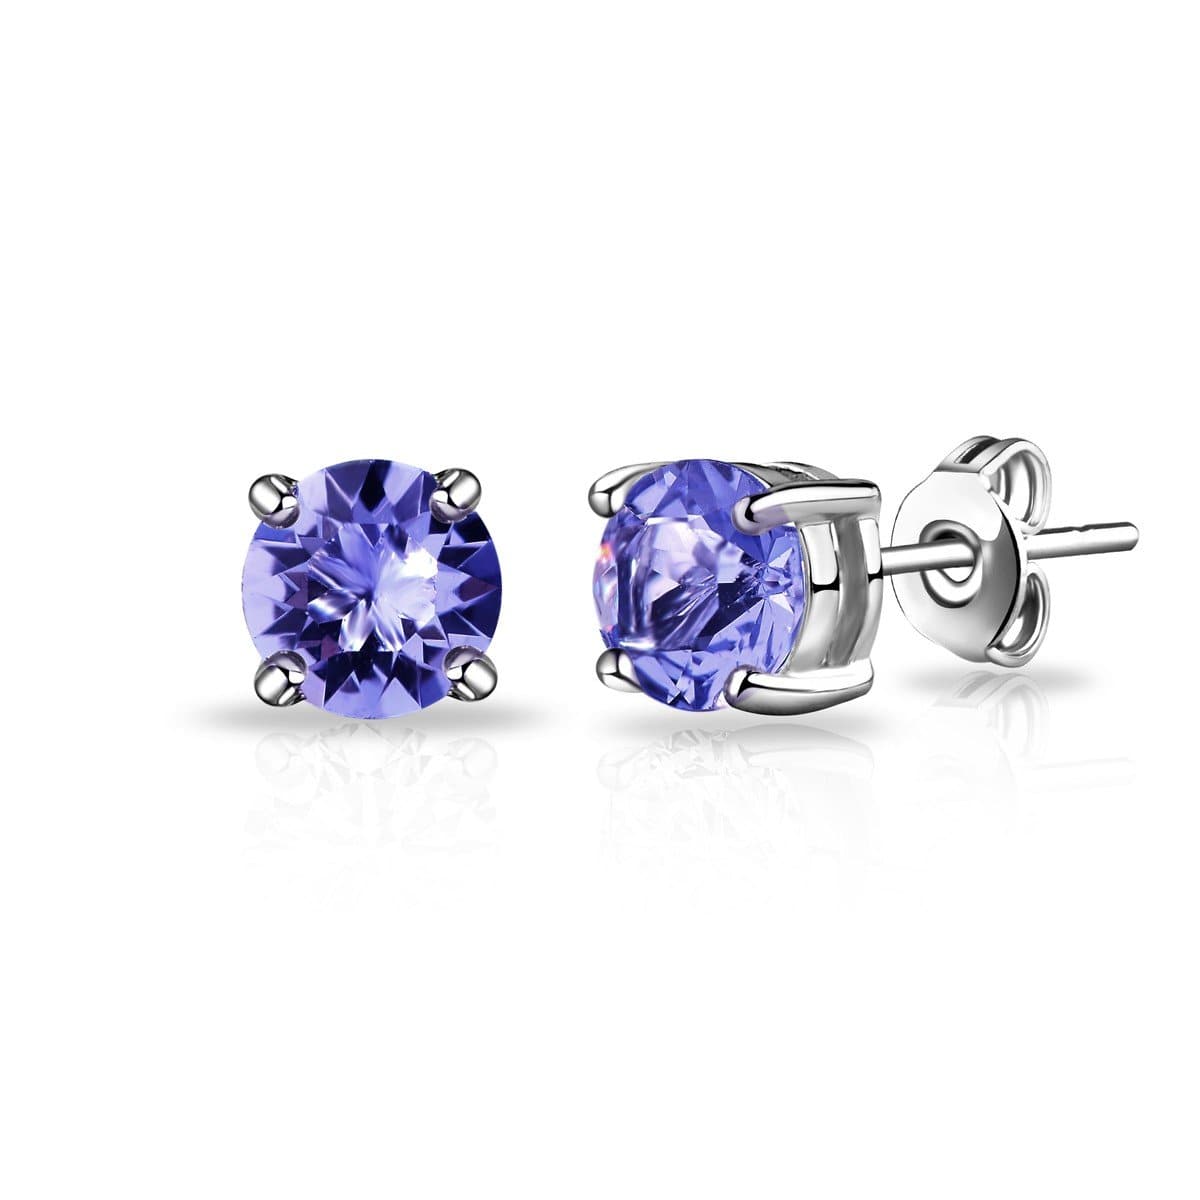 Light Purple Stud Earrings Created with Zircondia® Crystals by Philip Jones Jewellery